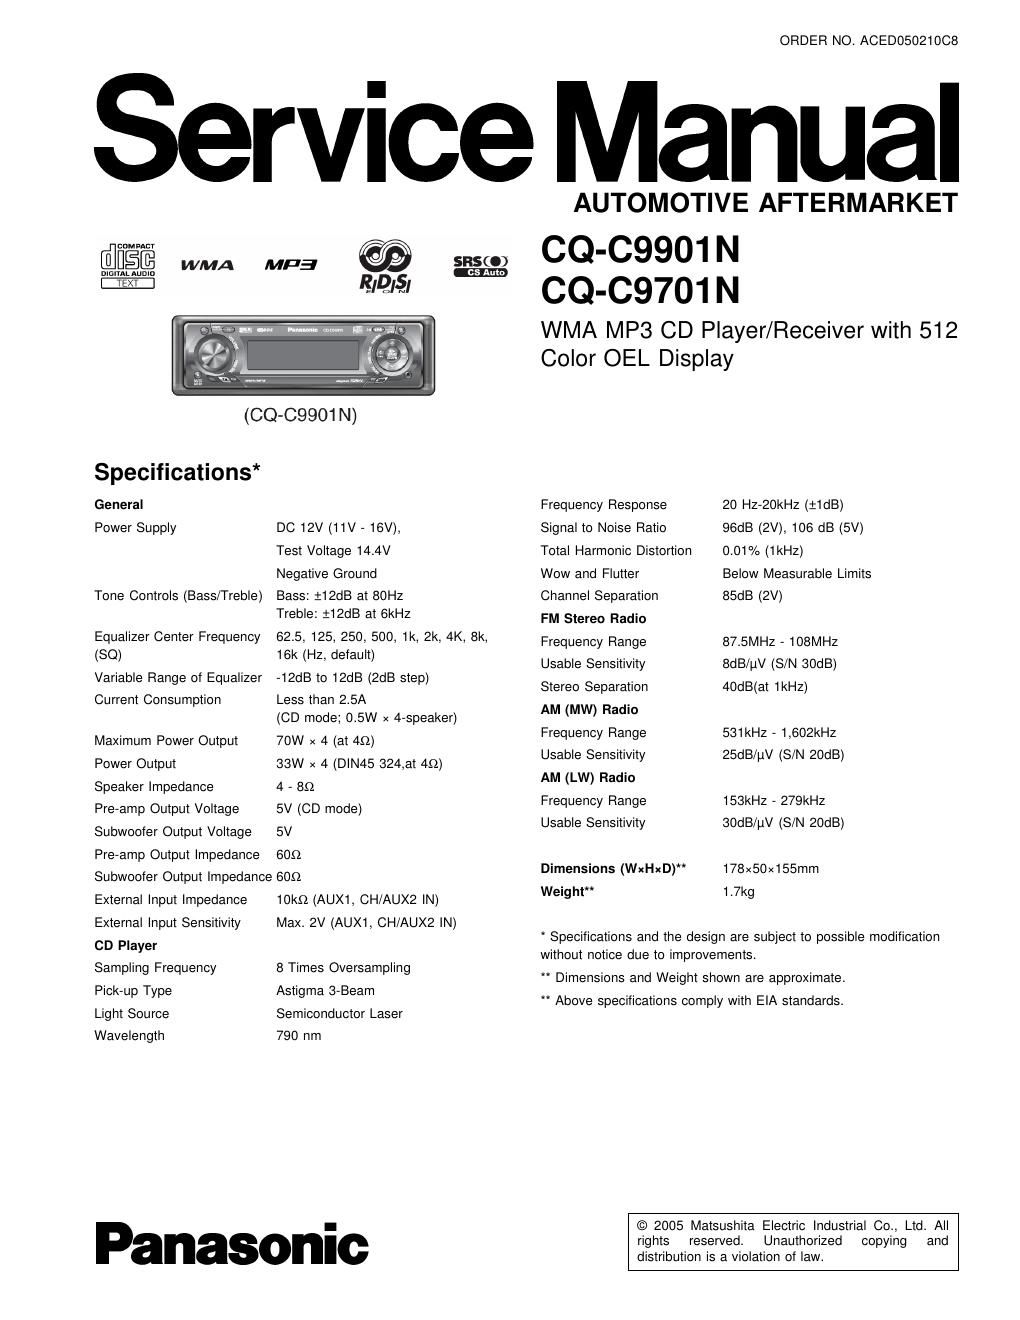 panasonic cq c 9701 n service manual